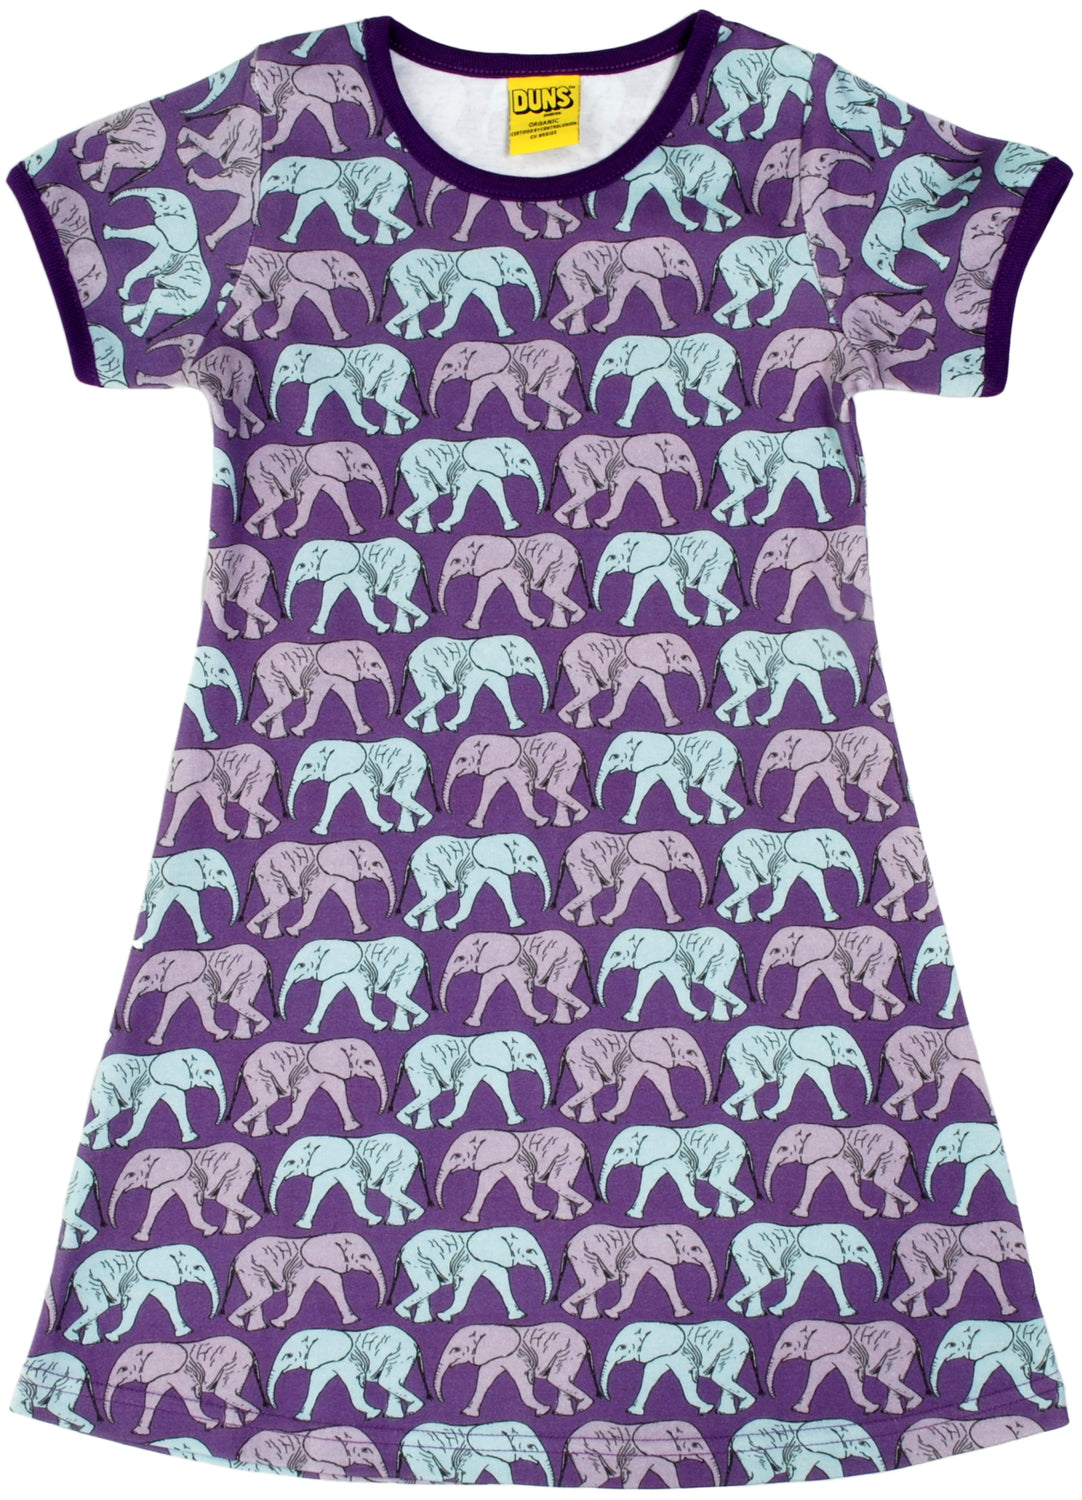 Duns Sweden - Short Sleeve Dress Elephants Purple